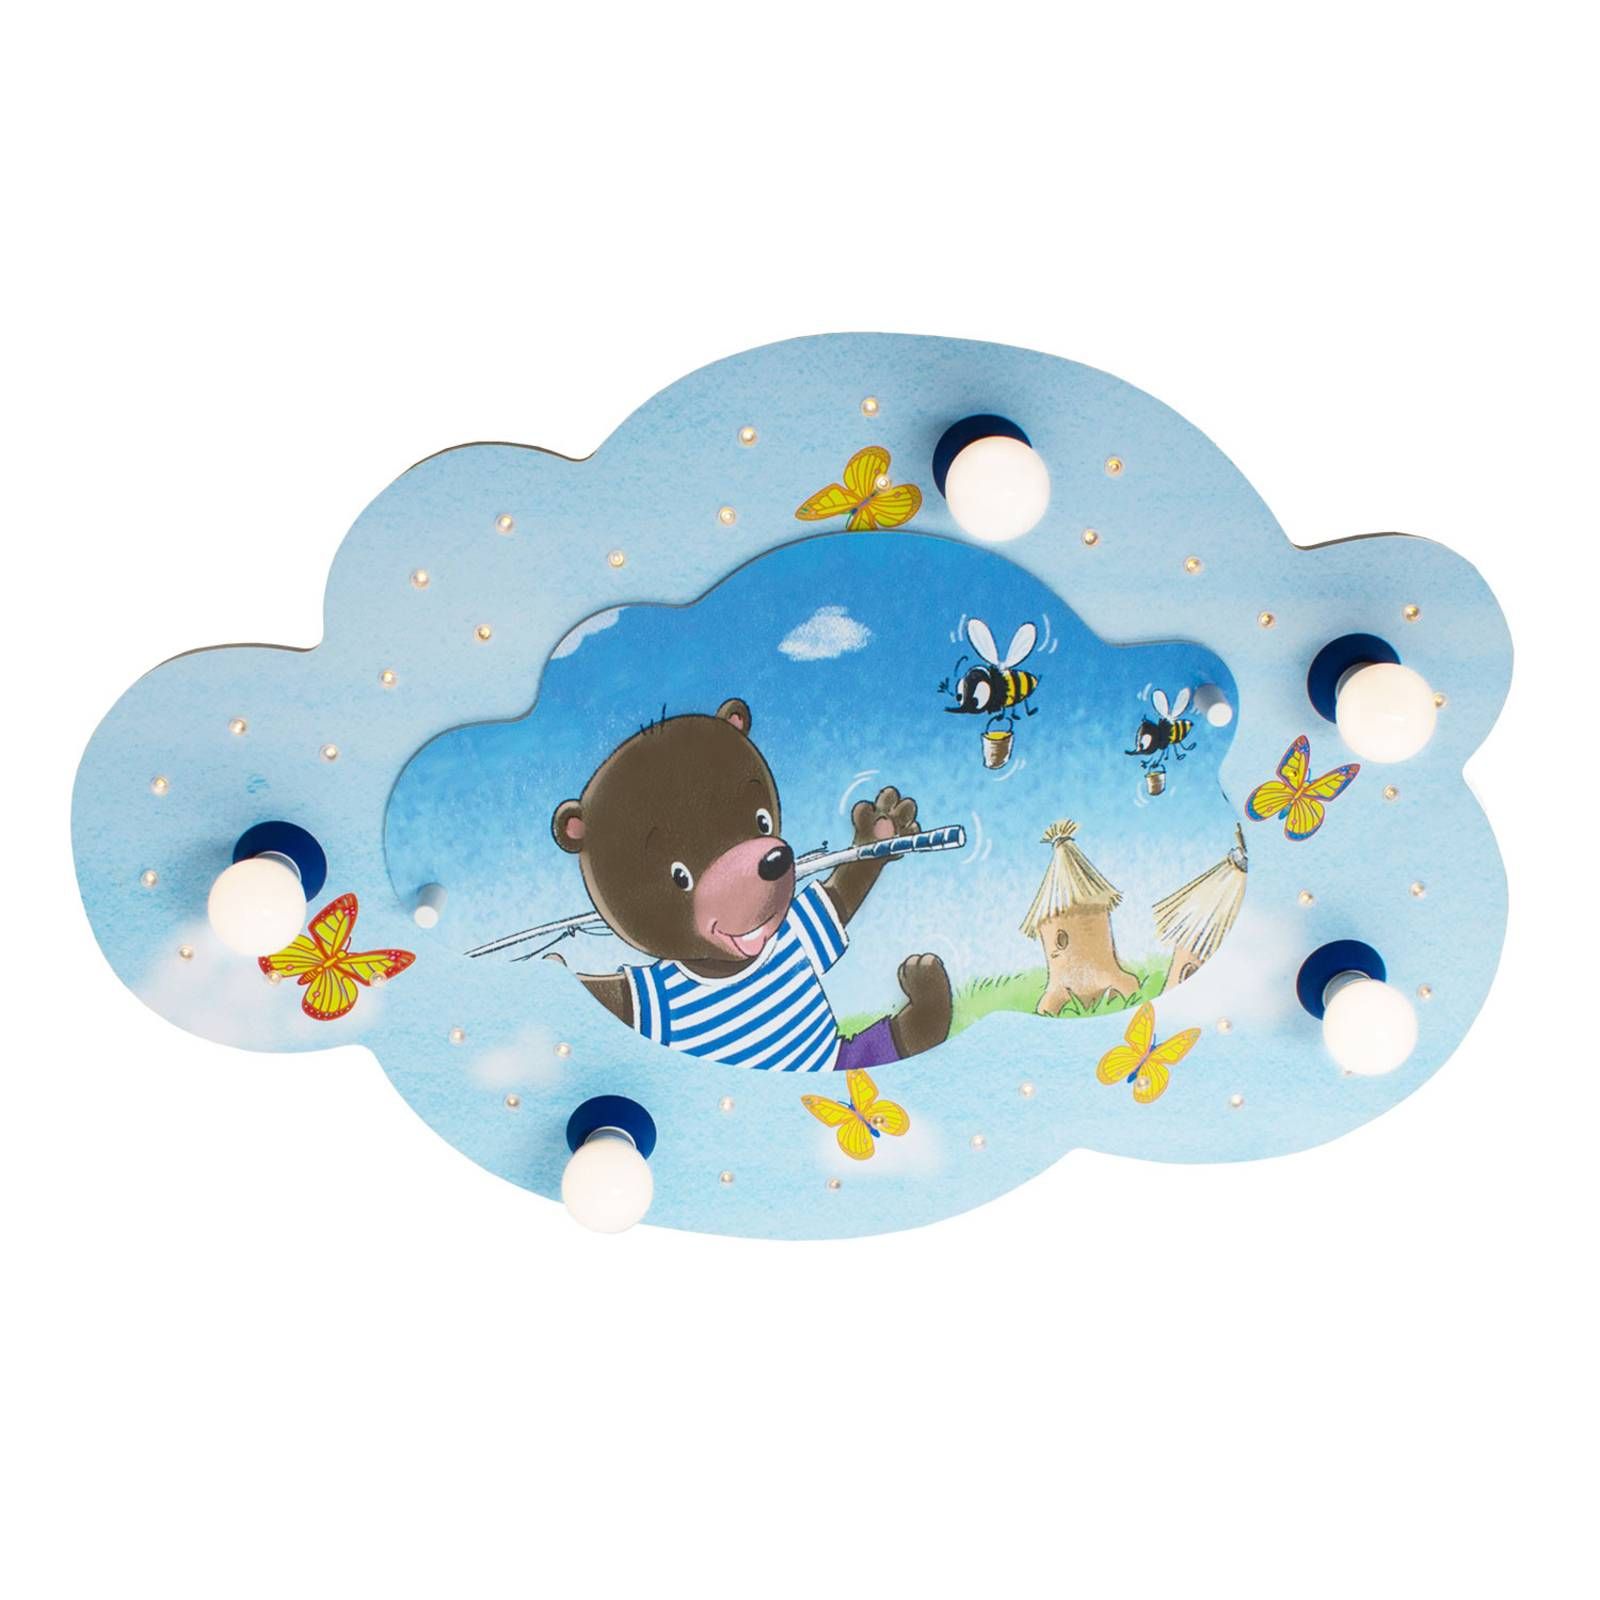 Elobra Stropné svietidlo Medveď s anjelom oblak modré, Detská izba, drevo, E14, 40W, P: 75 cm, L: 50 cm, K: 8cm